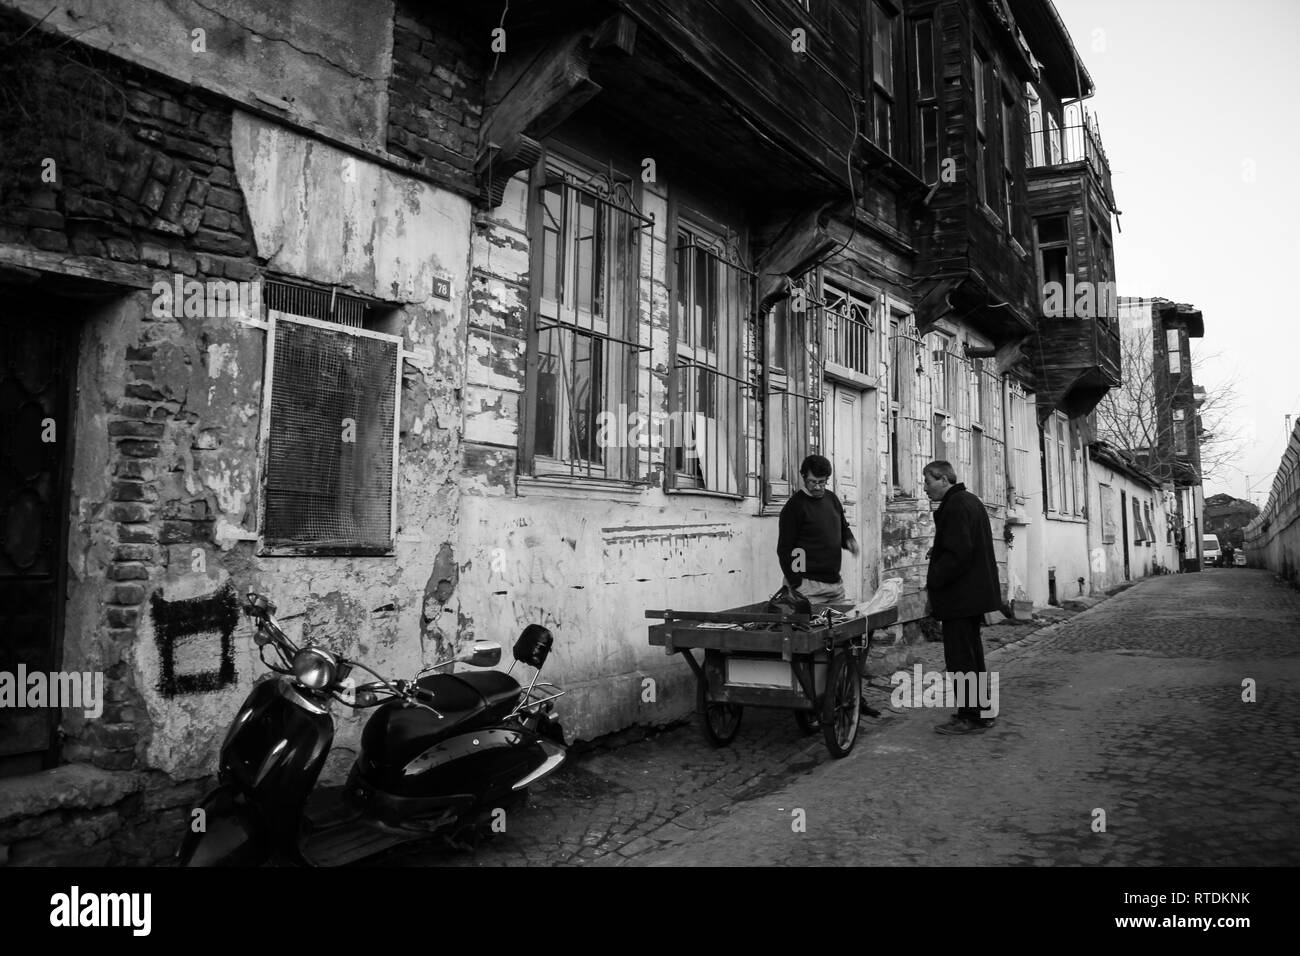 Cankurtaran, Fatih, Istanbul / Turkey - December 26 2012: A street in the old town of Istanbul, Cankurtaran Stock Photo